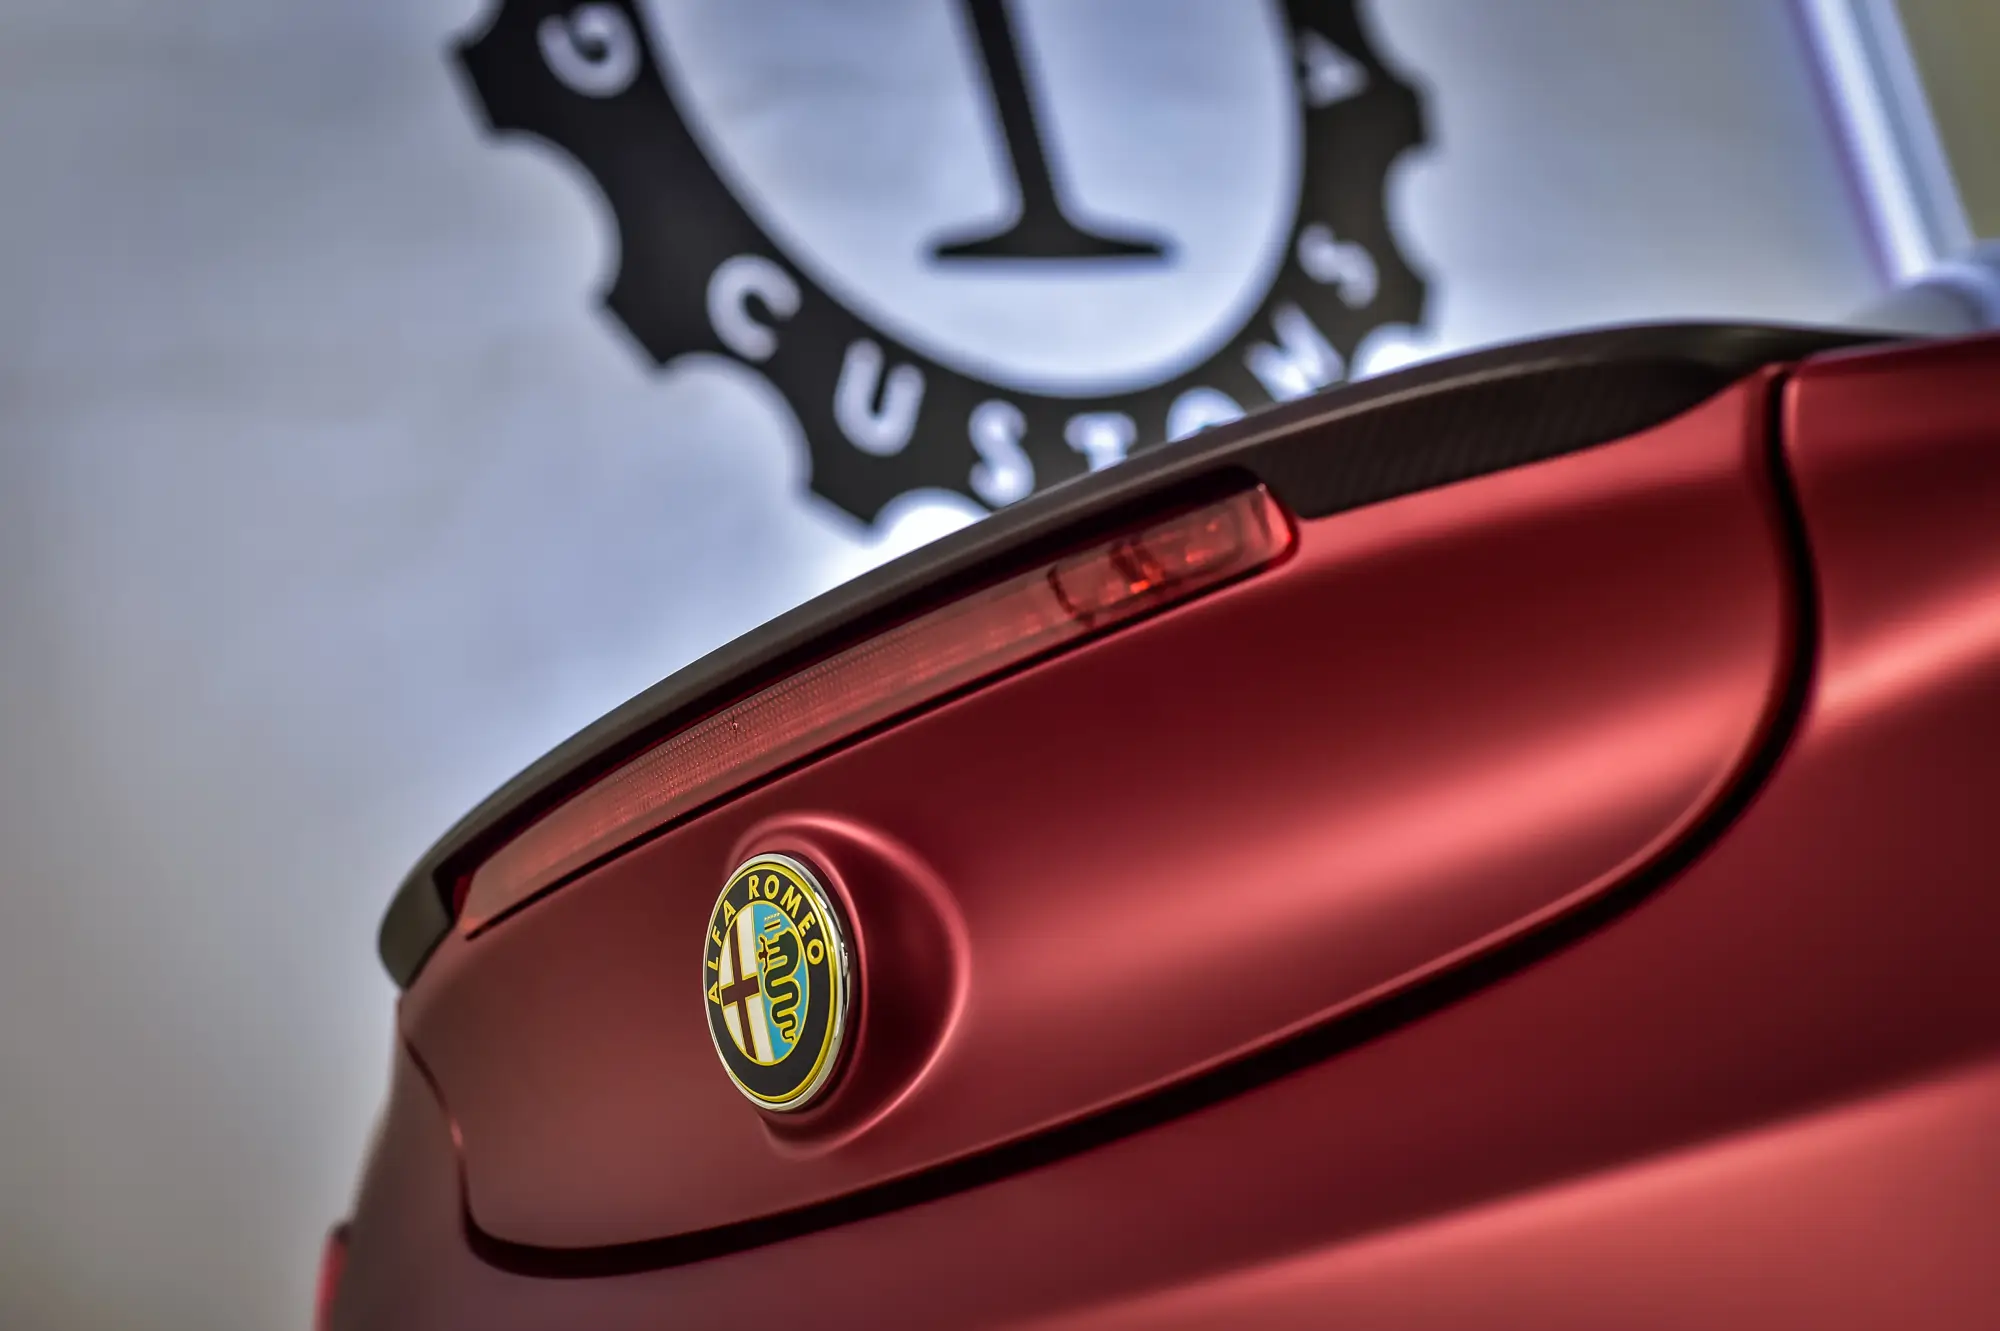 Alfa Romeo 4C La Furiosa by Garage Italia Customs - 3